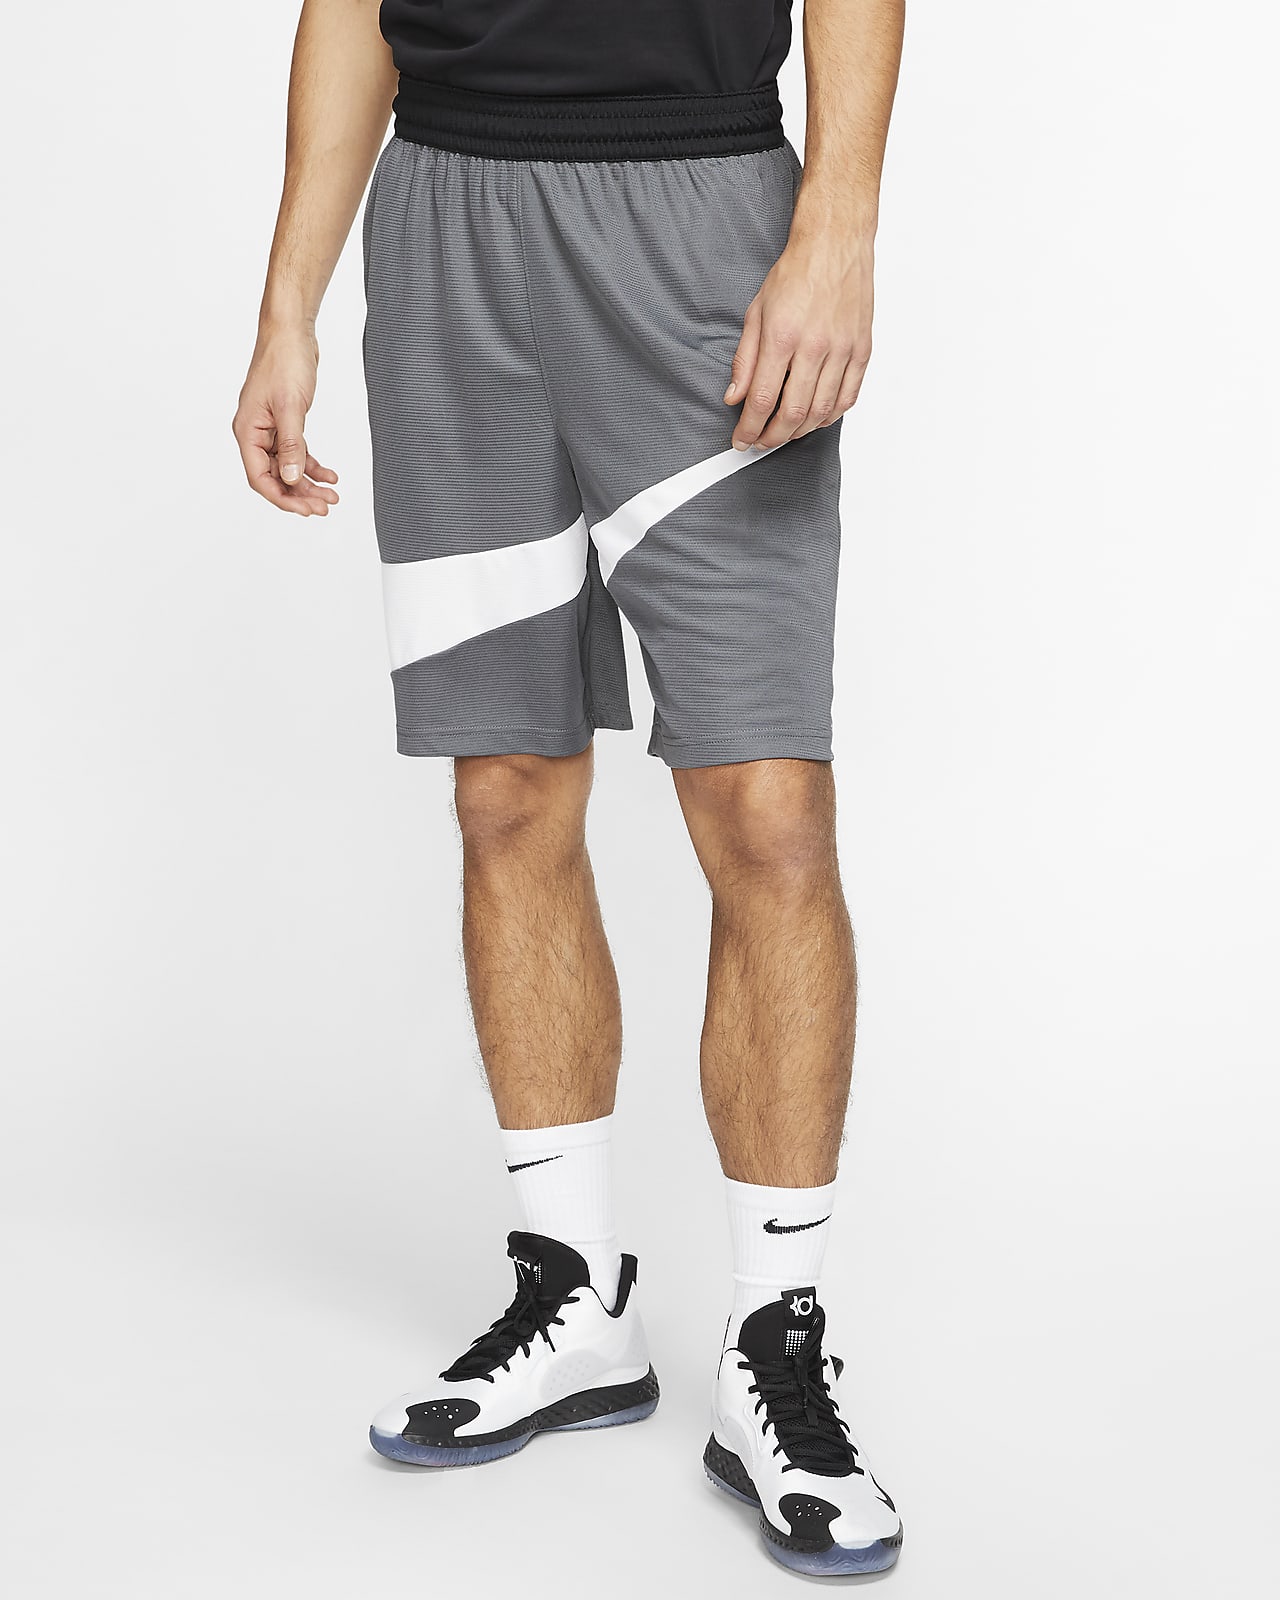 dri fit basketball shorts